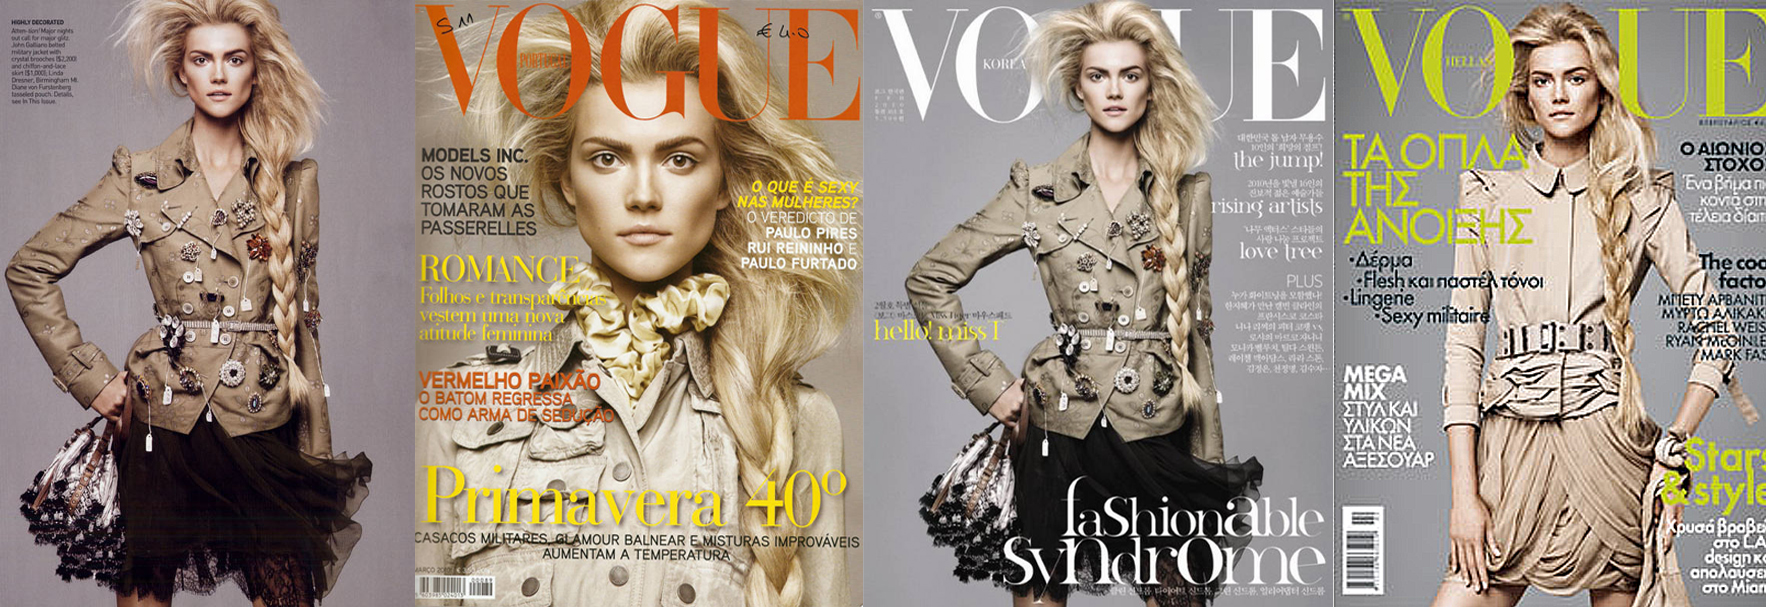 Kasia Struss Covers Vogue Korea, Vogue Portgual, Vogue Hellas. Pic from American Vogue